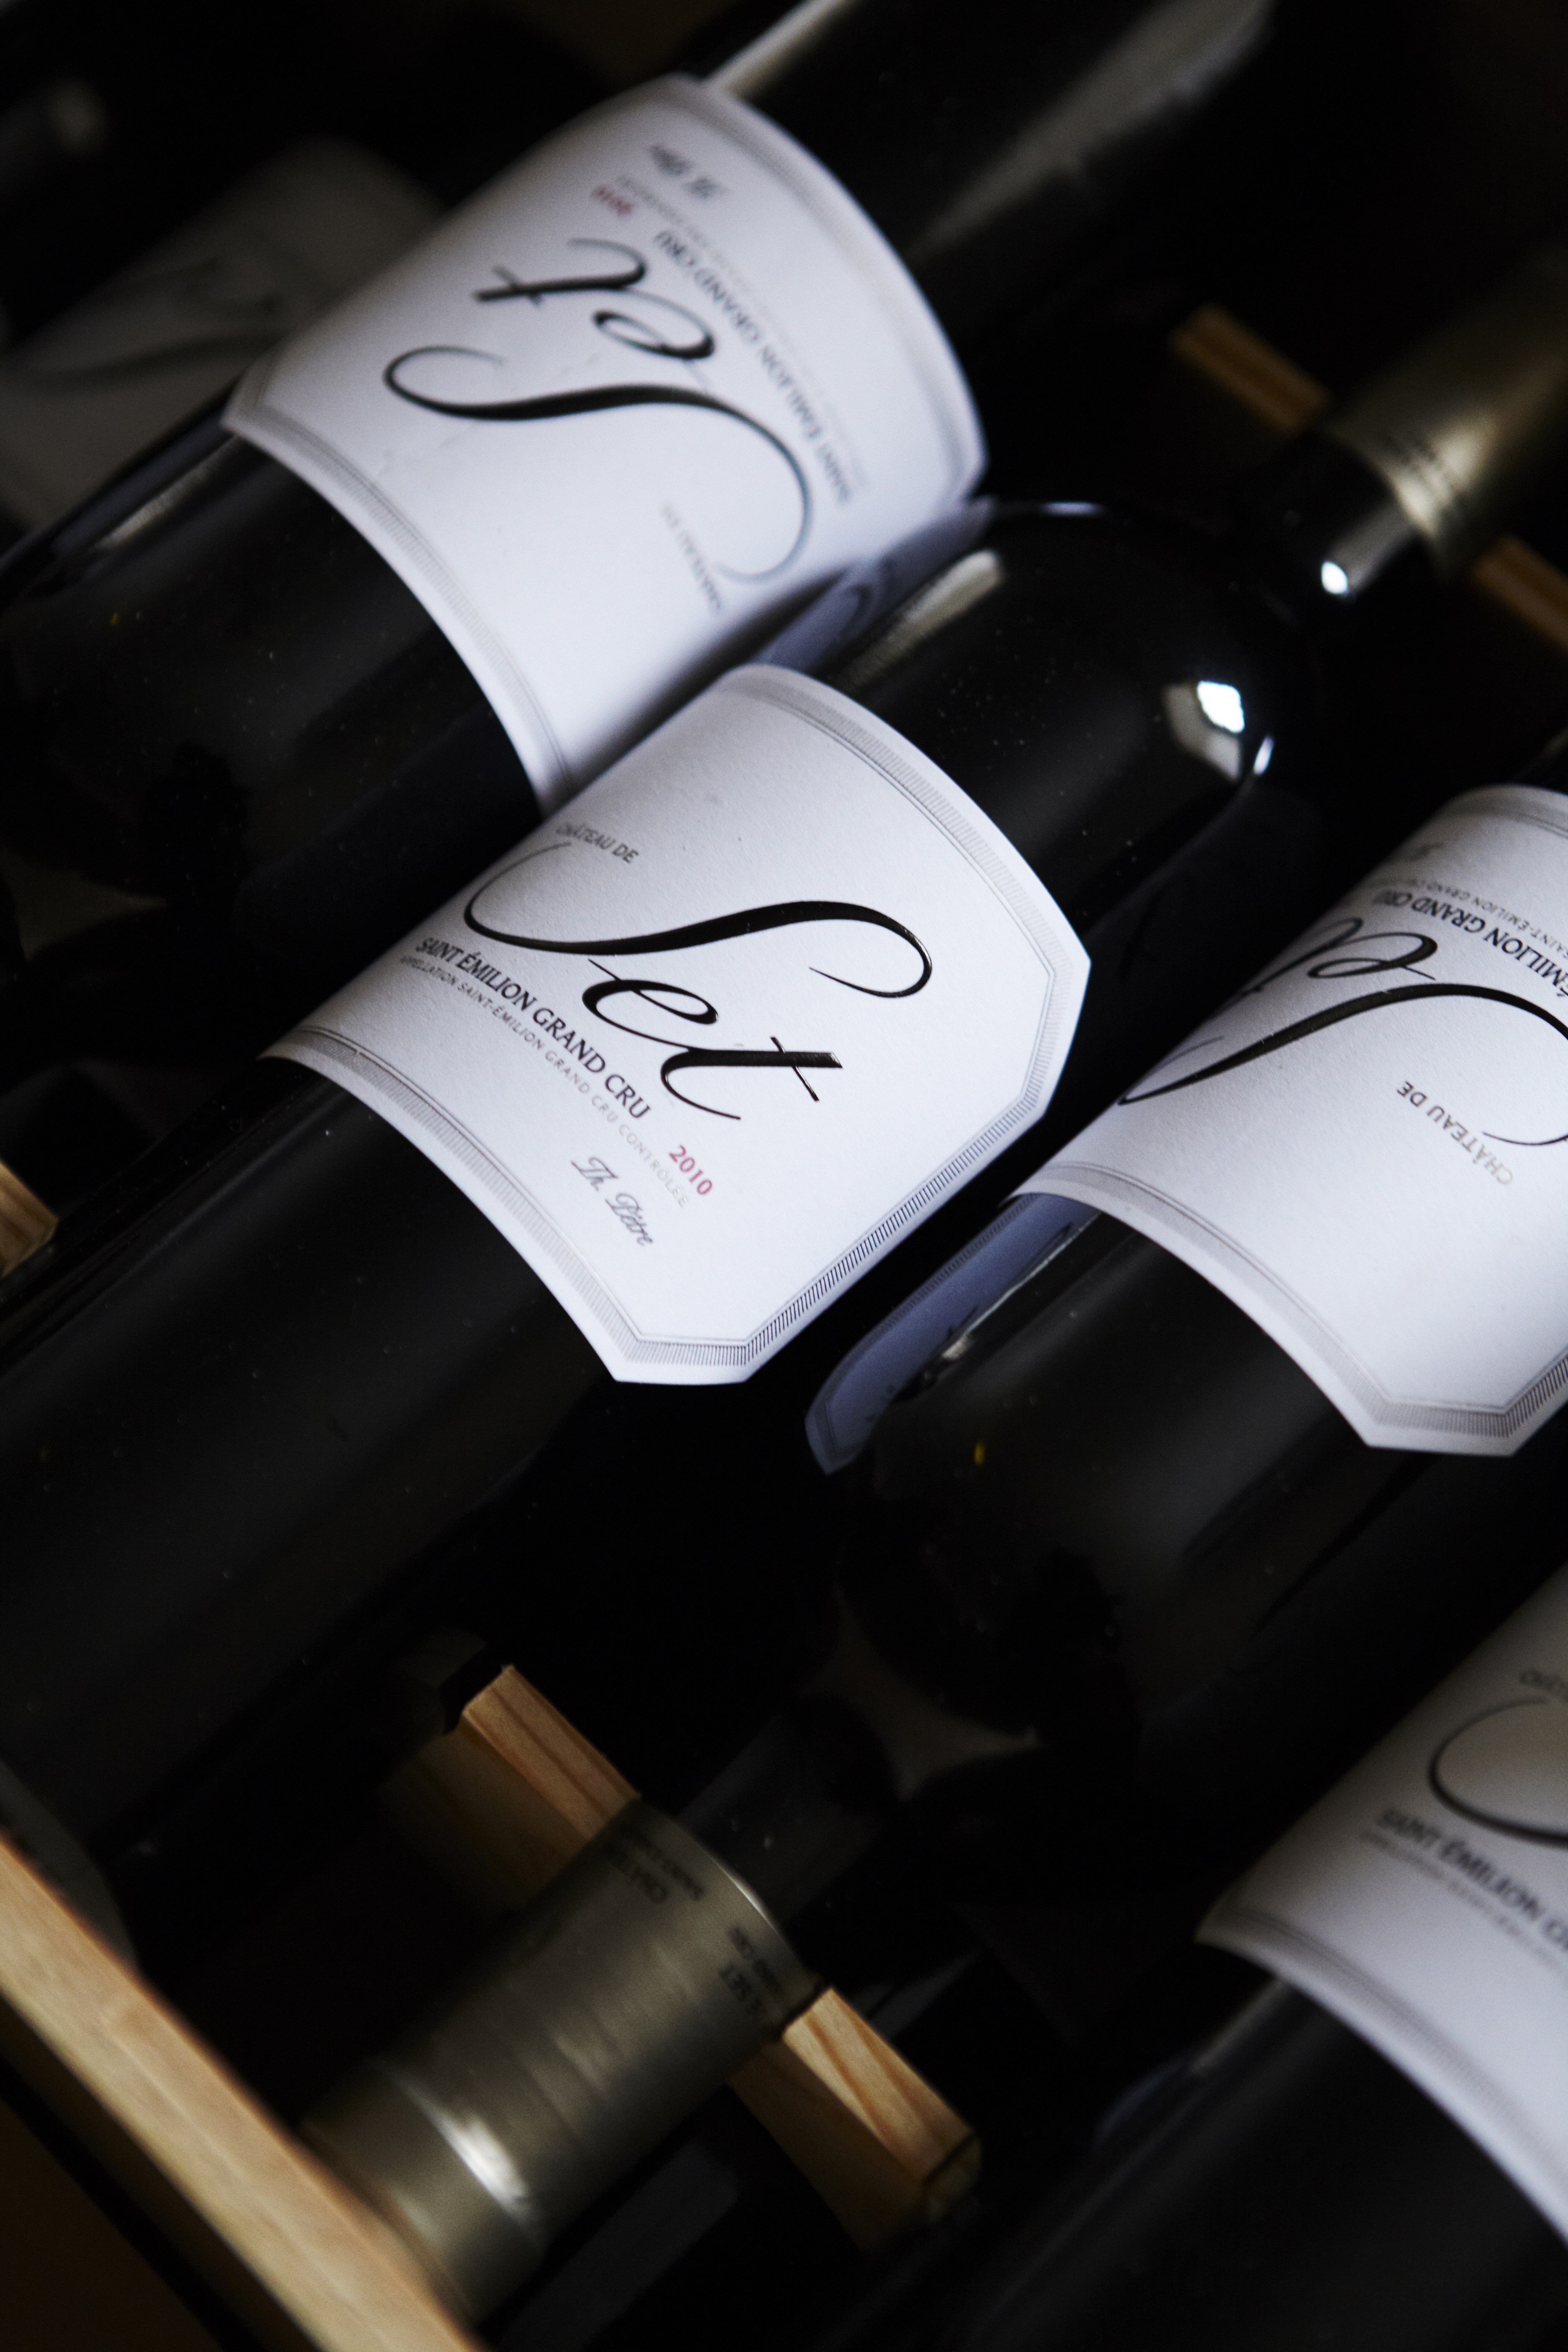 ② Diverse lege wijnkisten van gerenommeerde Chateaux — Bricolage